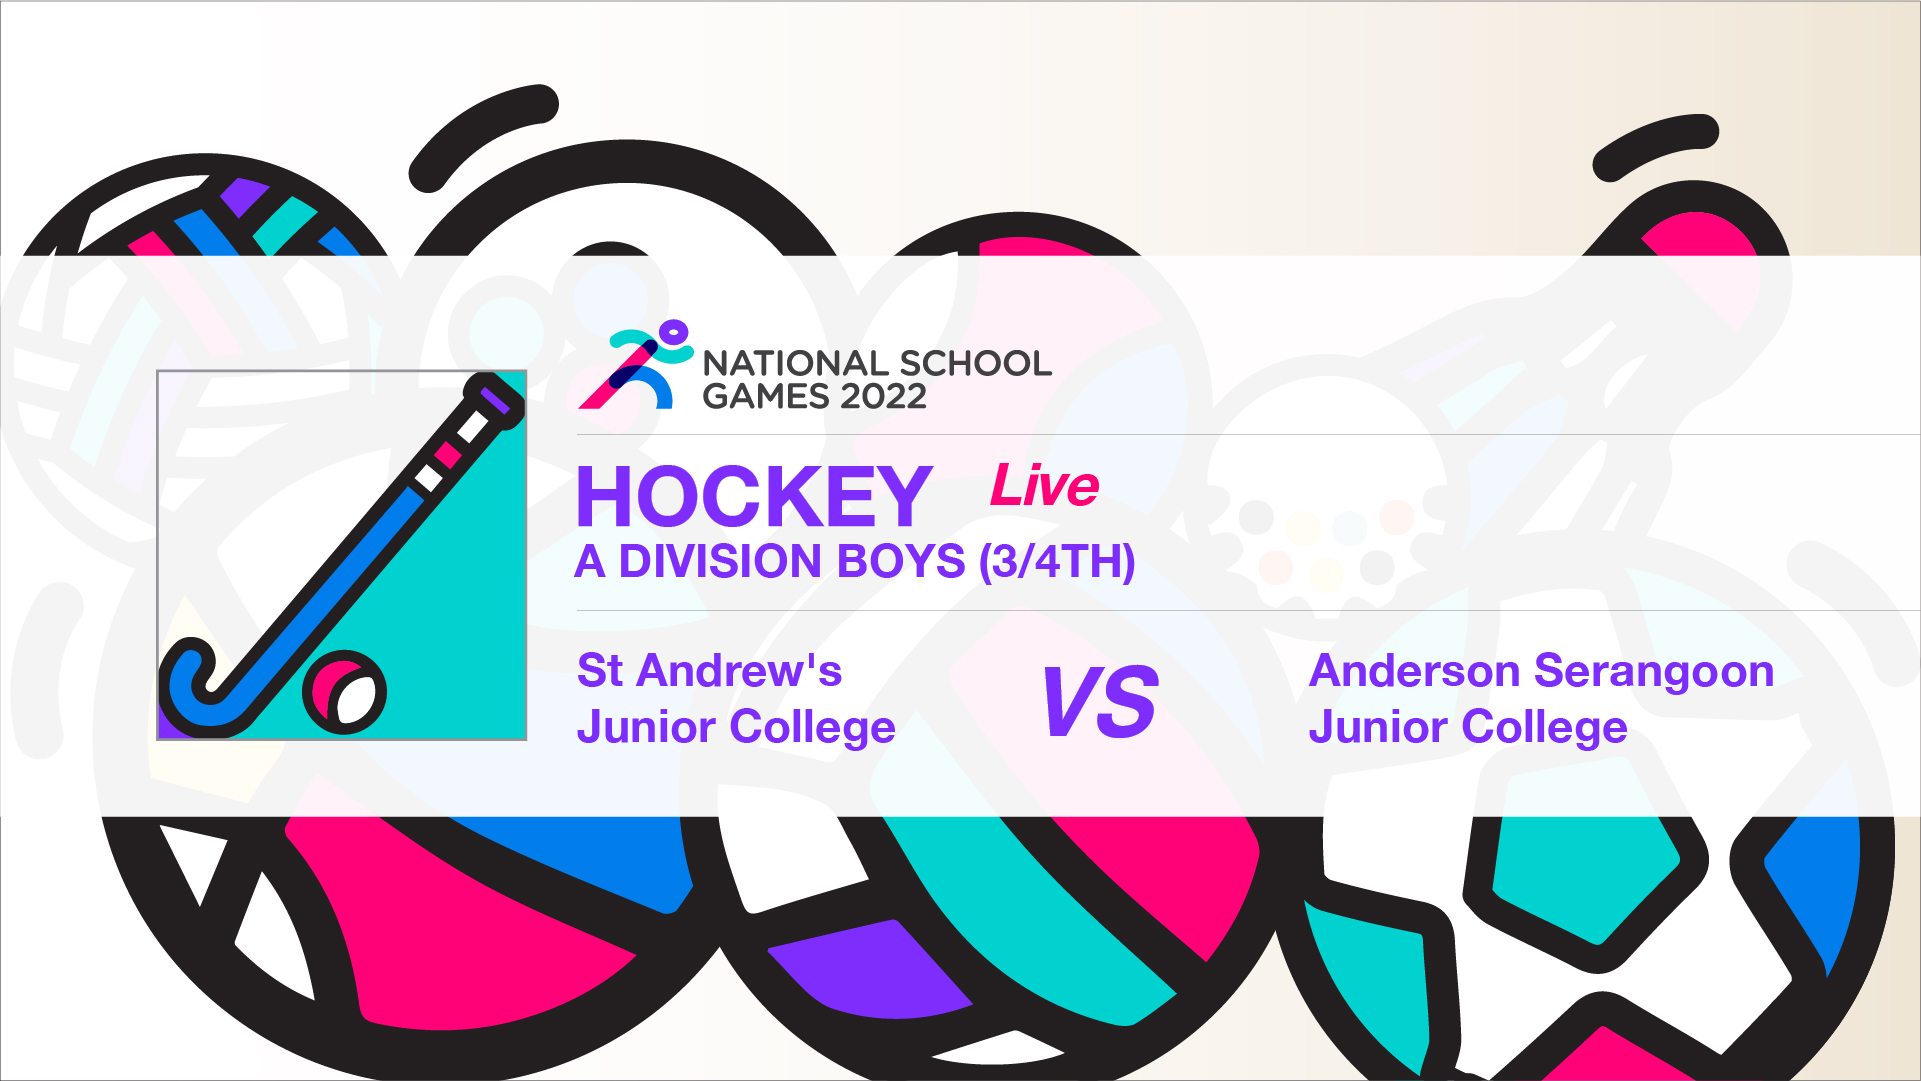 SSSC Hockey A Division Boys (3/4th) Live | St. Andrew's Junior College vs Anderson Serangoon Junior College